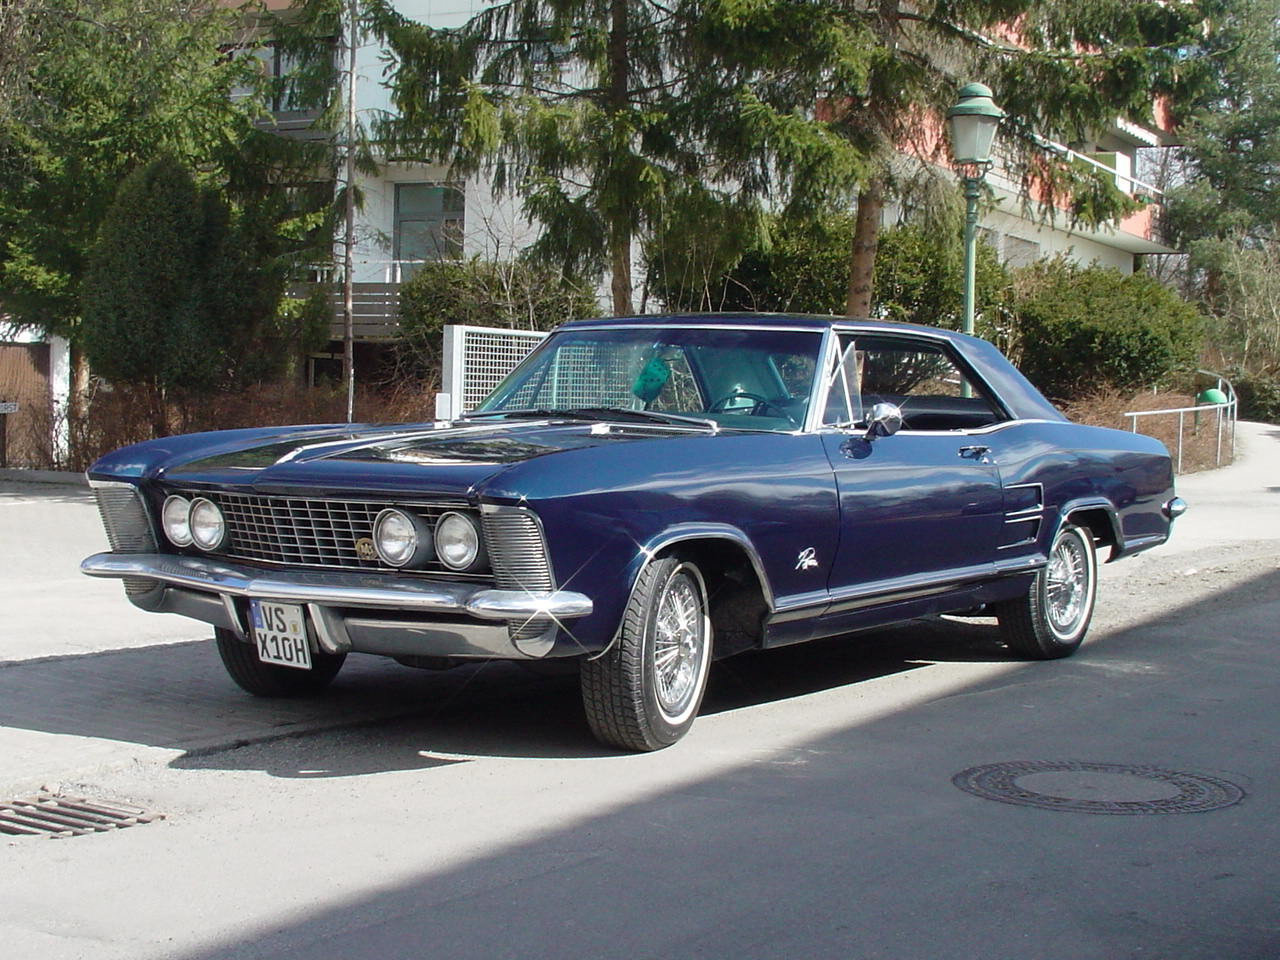 File:Buick Riviera.jpg - Wikipedia, the free encyclopedia